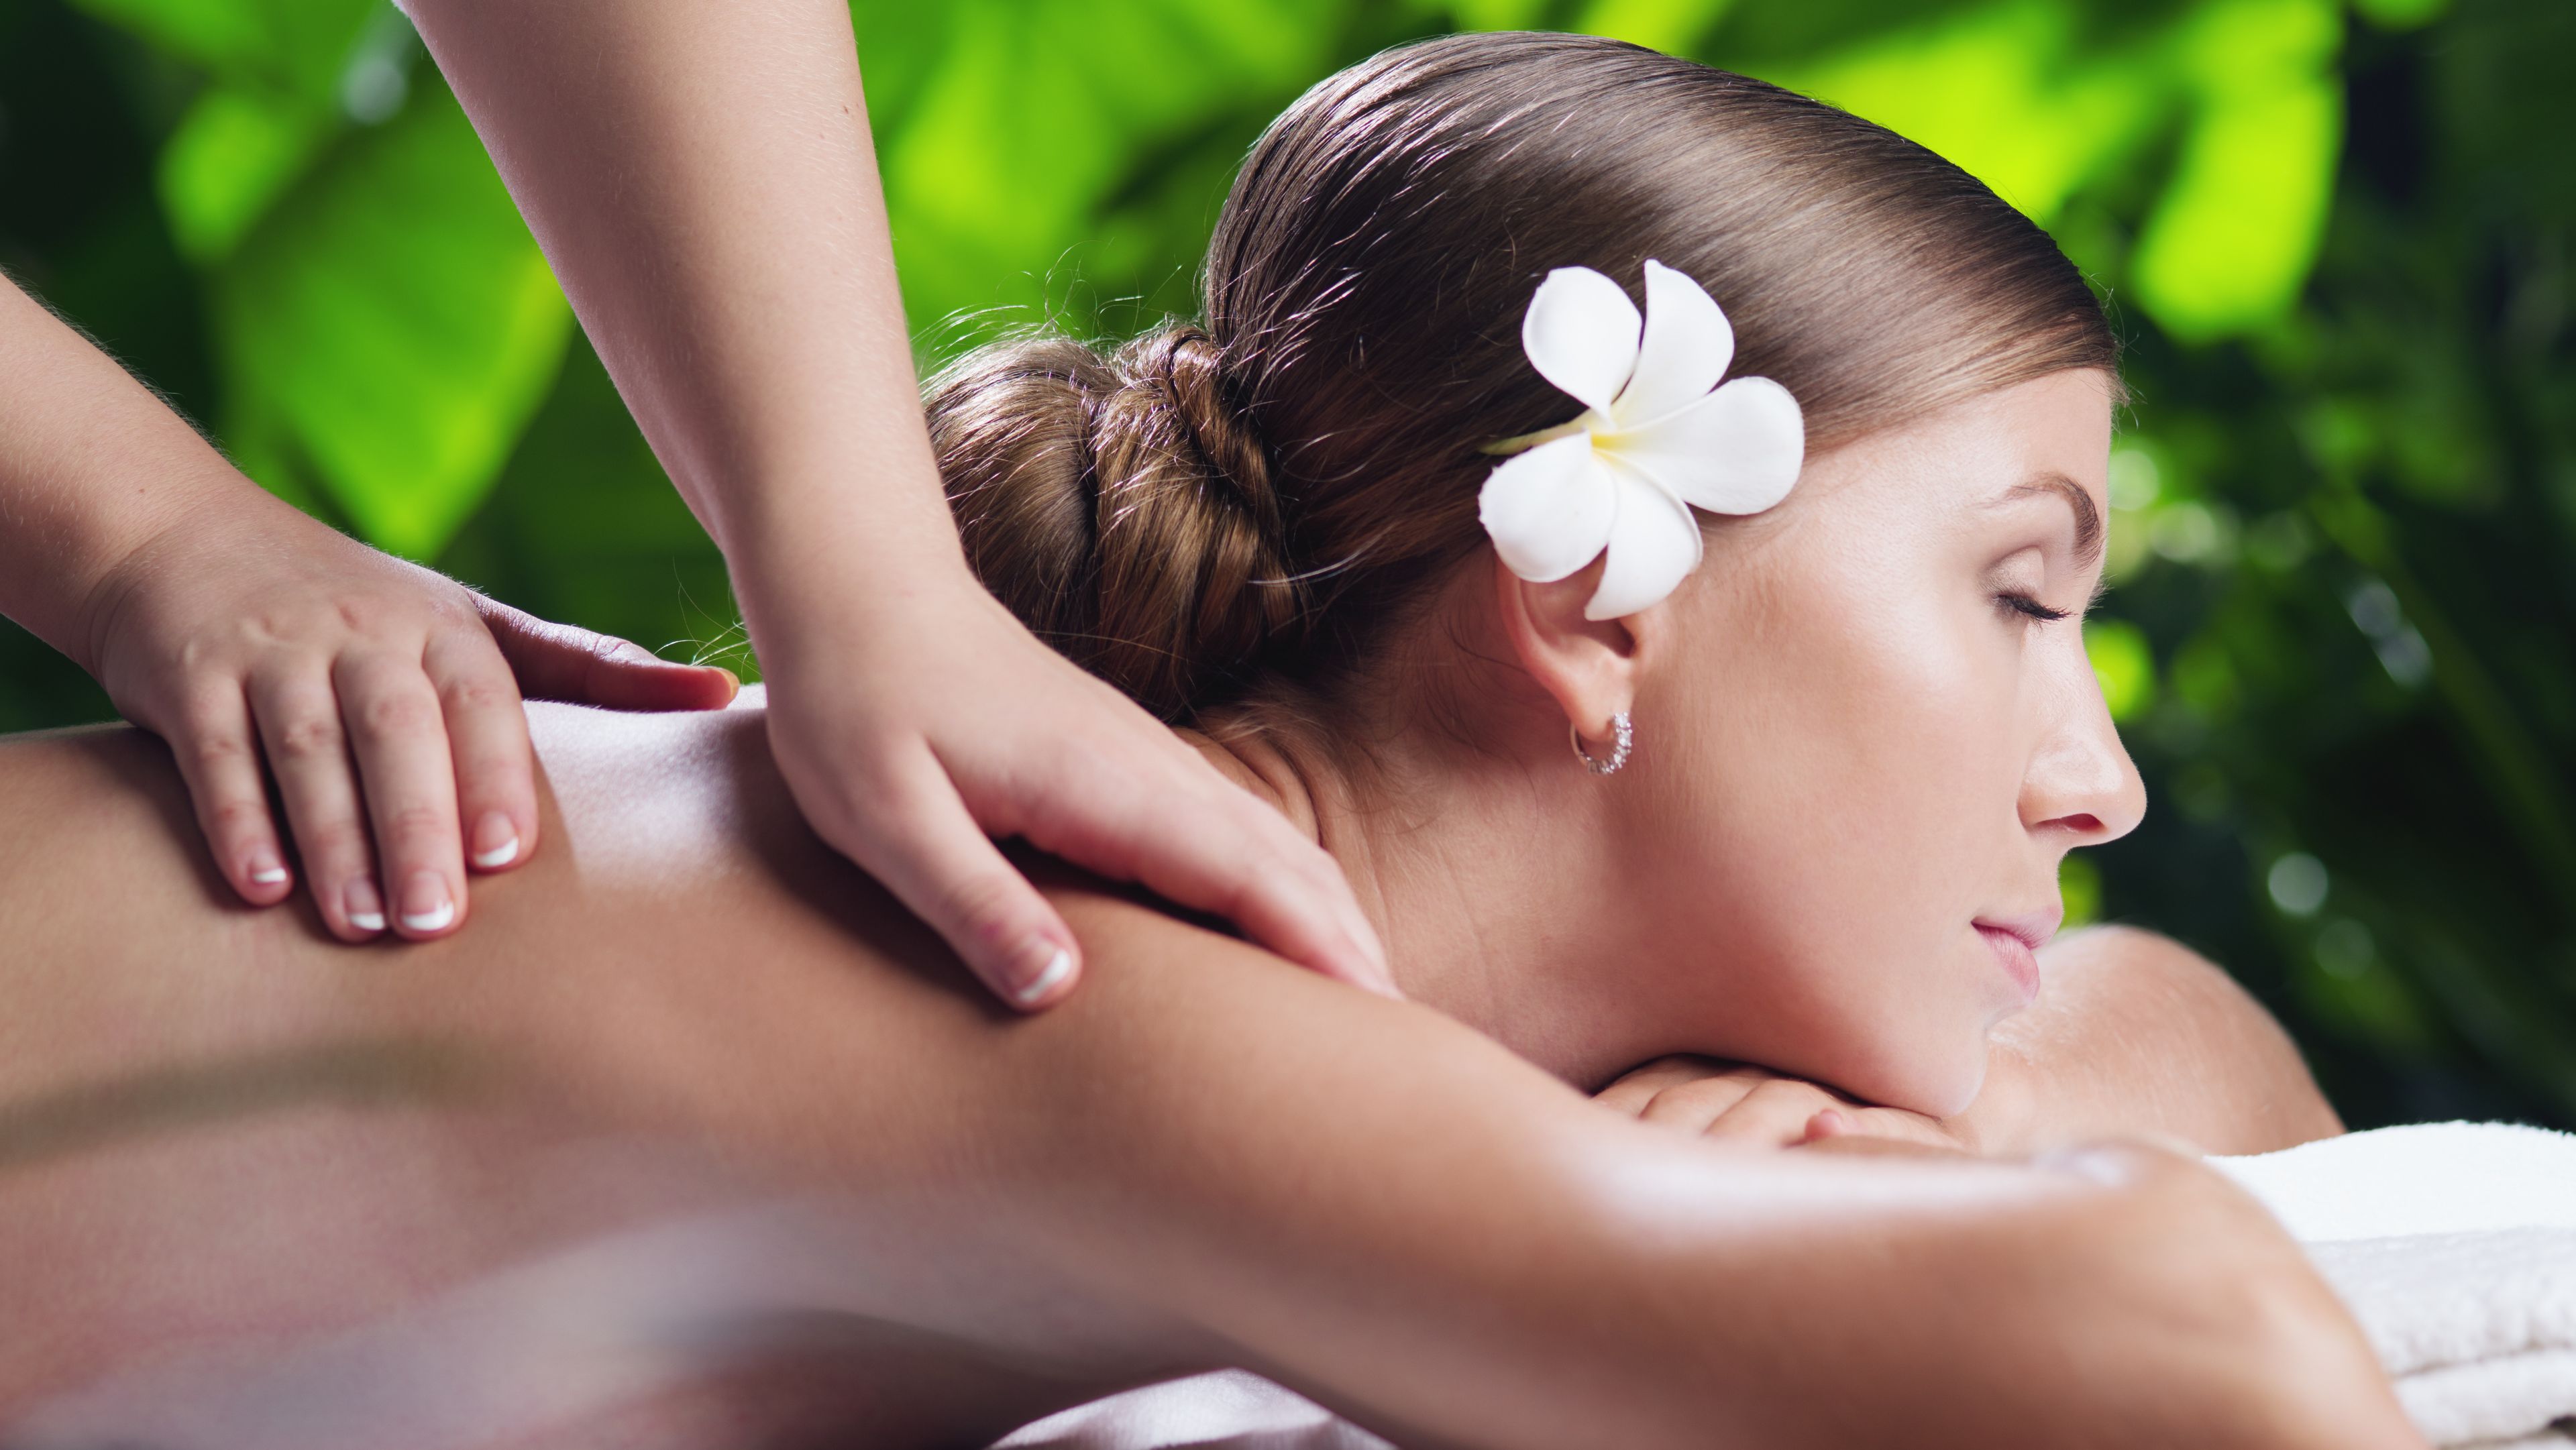 A woman gets a Thai massage